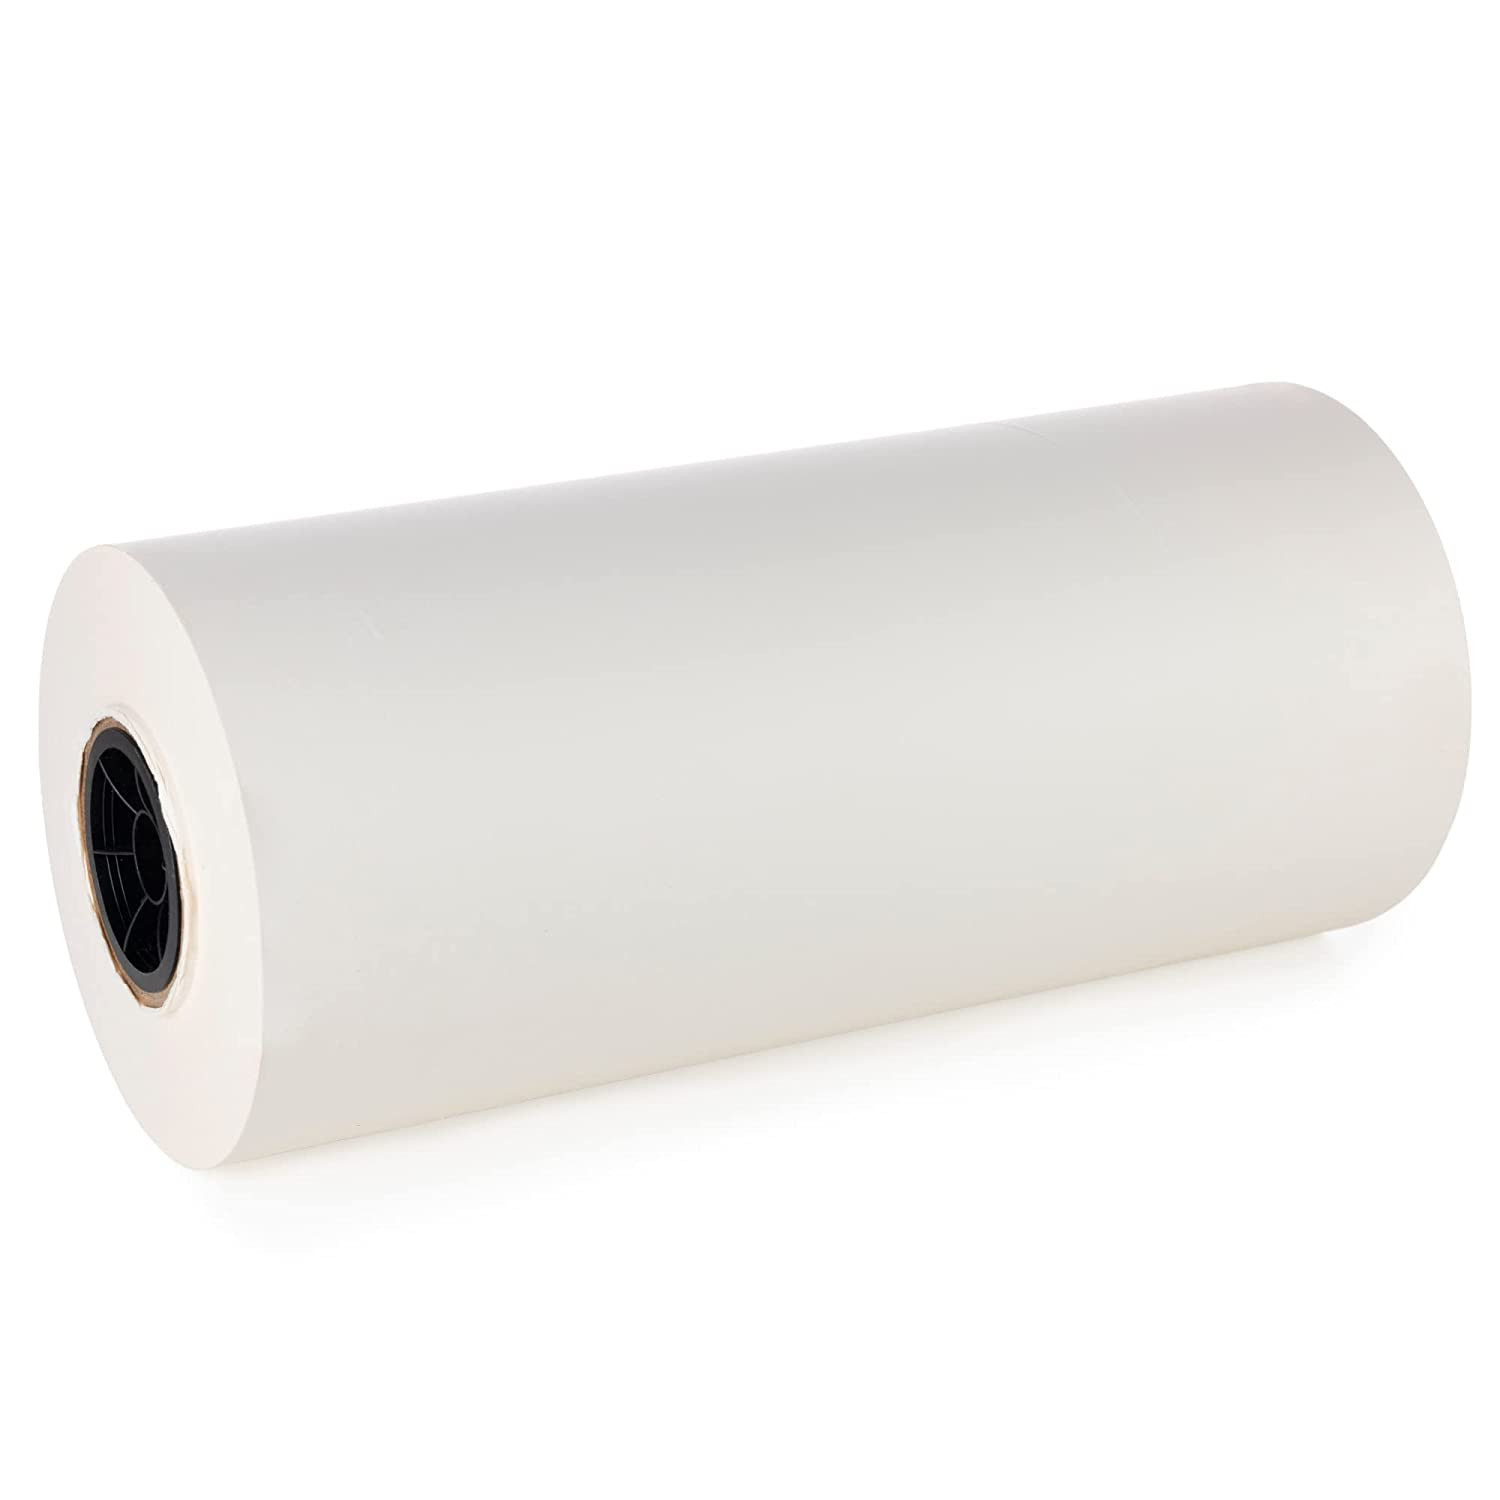 36 x 150' Natural Kraft Paper Roll, 50 lbs (1, 2, 4, 6 rolls) buy in stock  in U.S. in IDL Packaging